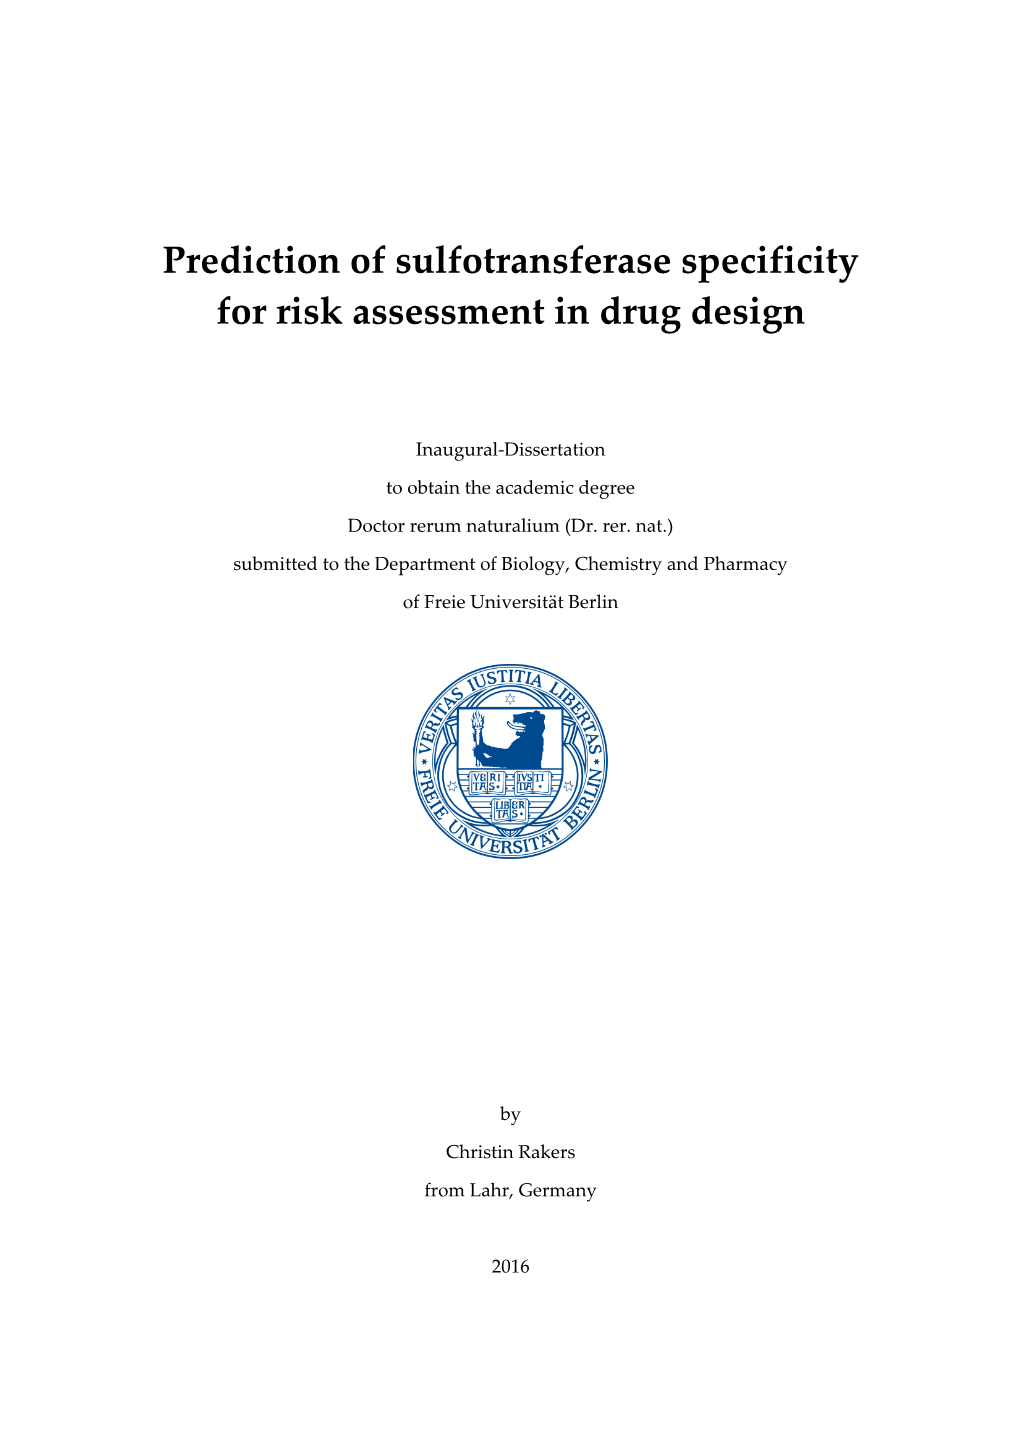 Prediction of Sulfotransferase Specificity for Risk Assessment in Drug Design